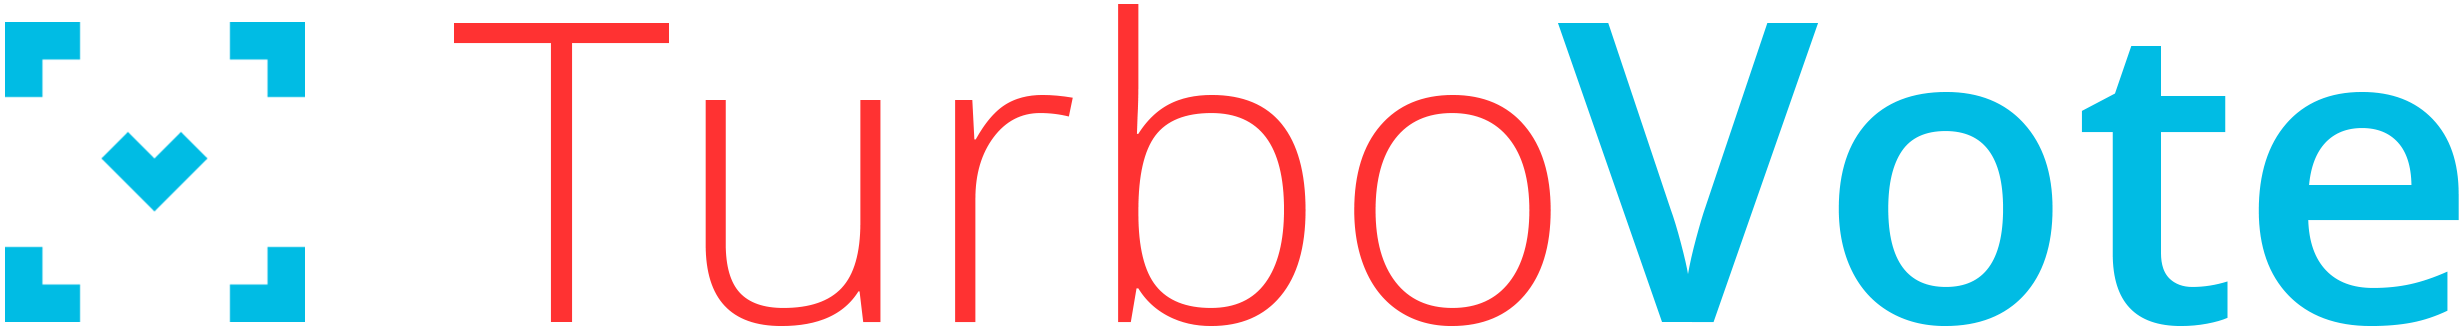 turbovote-logo1